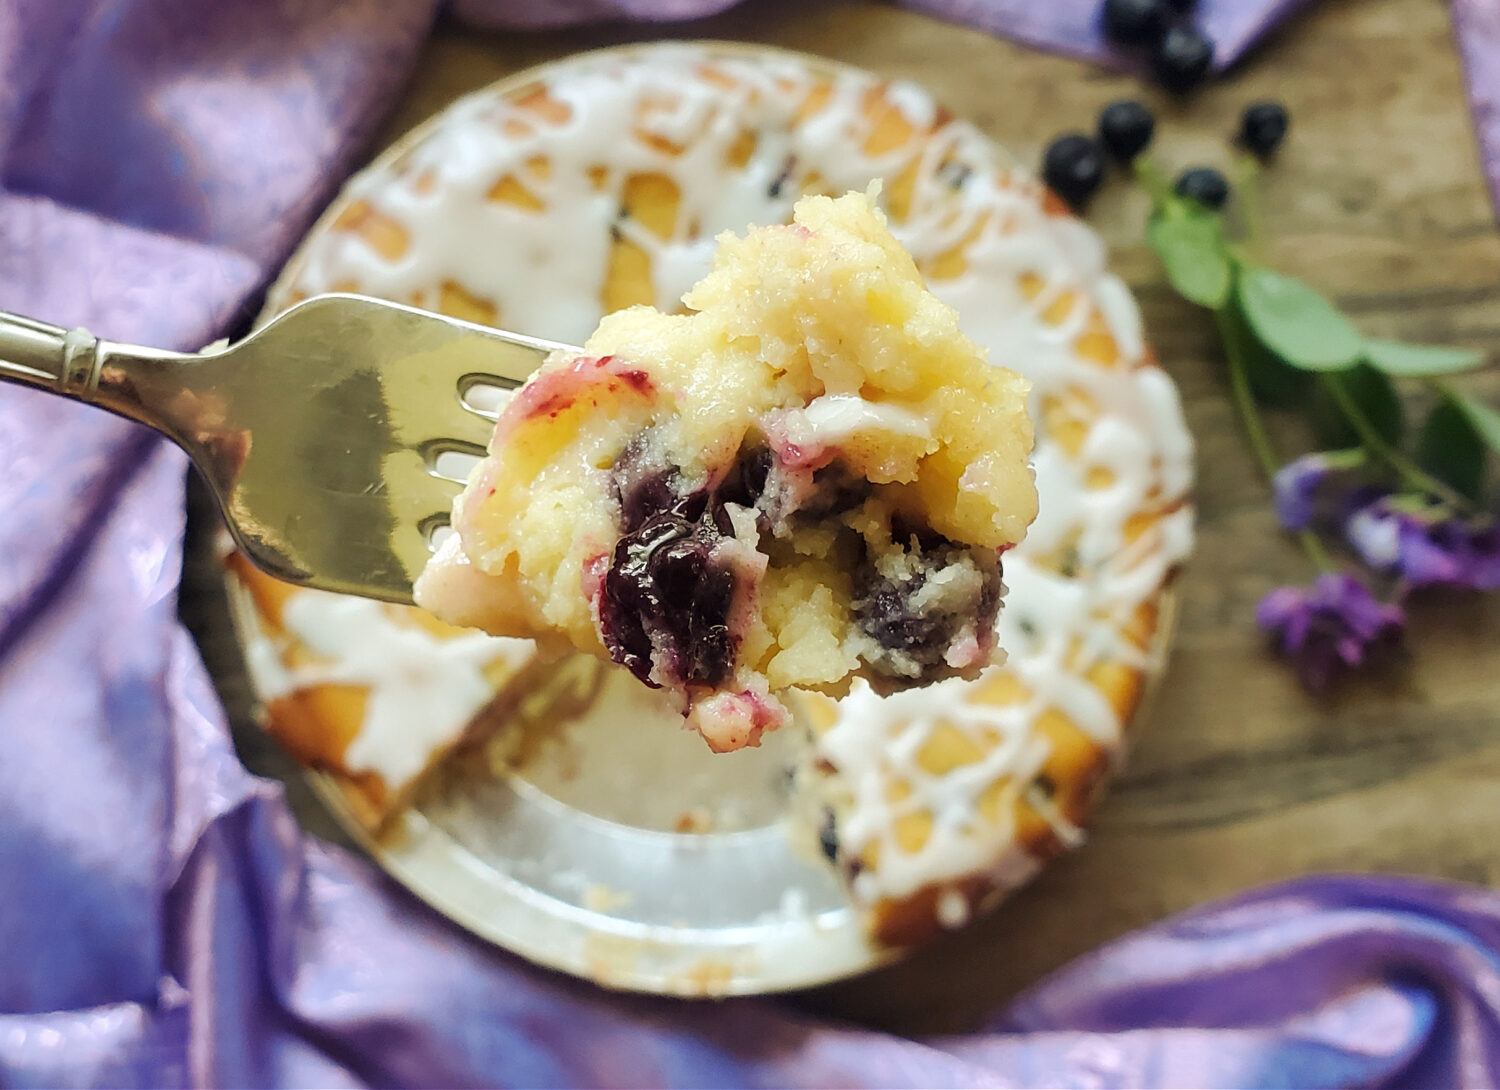 Blueberry Lemon Brownie Batter Pie; the dynamic duo of blueberries & lemon in creamy batter-like pie topped with lemon glaze.